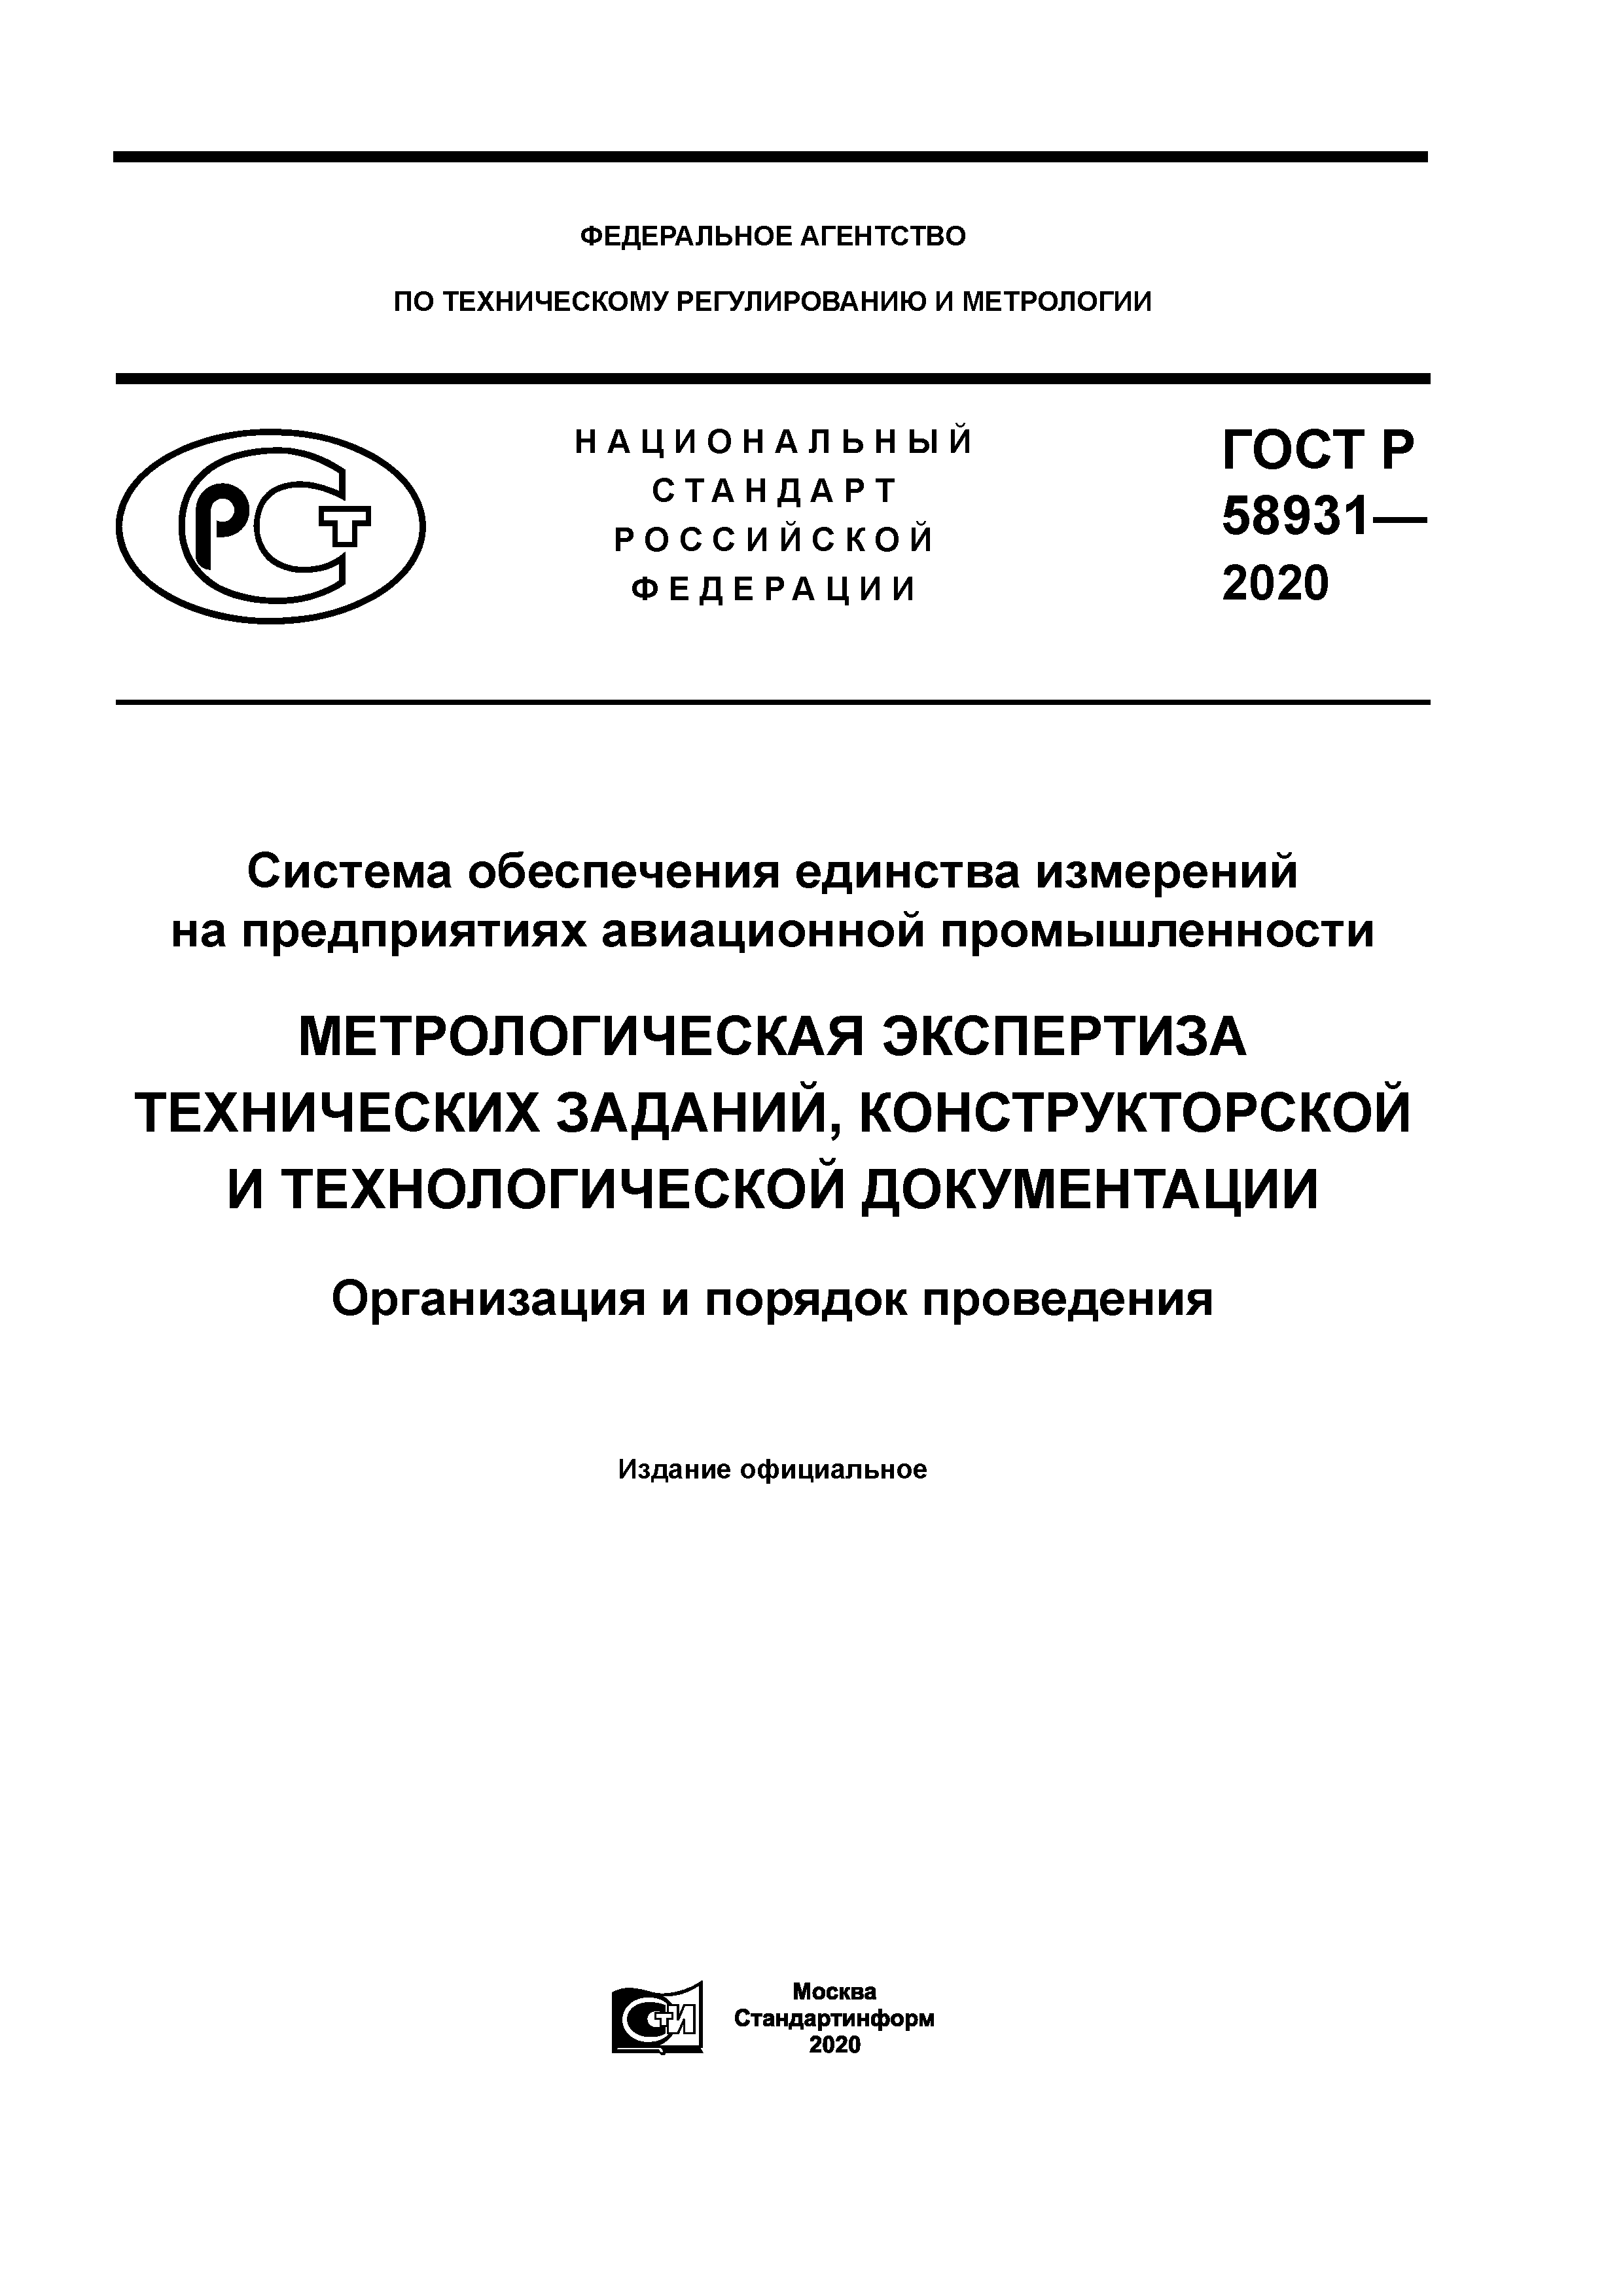 ГОСТ Р 58931-2020